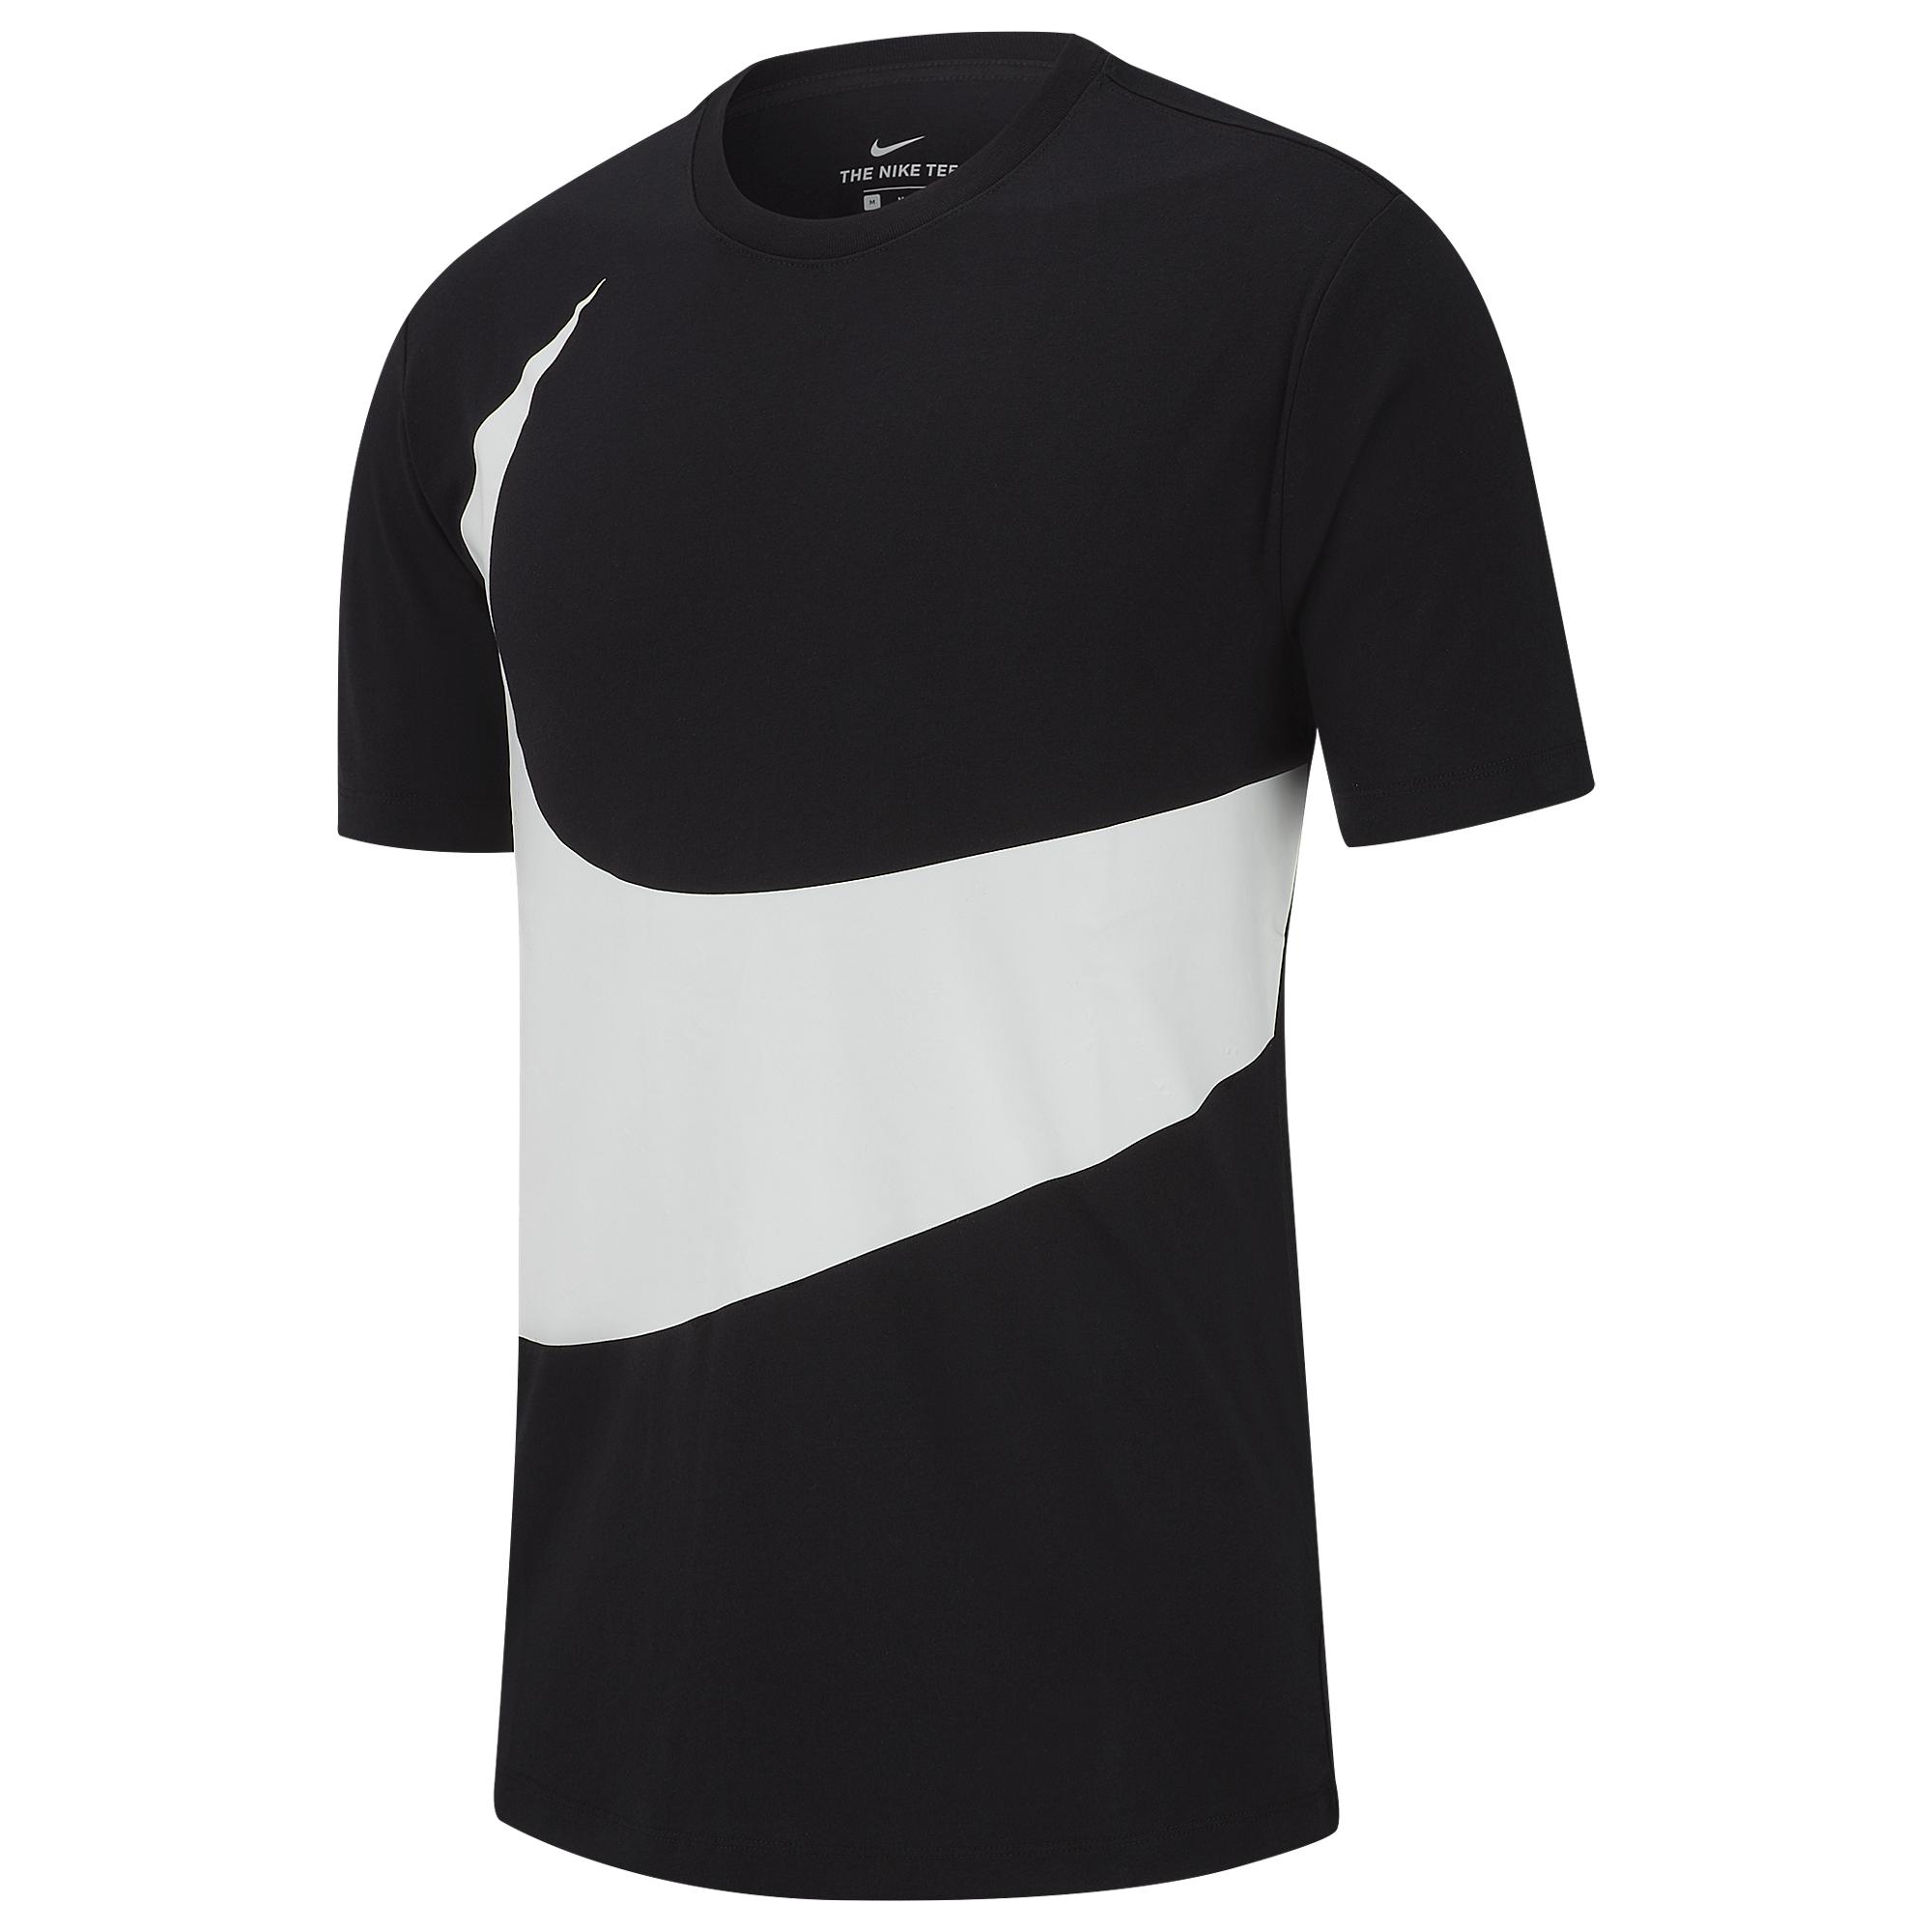 Nike Cotton Large Swoosh T-shirt in Black/White (Black) for Men - Lyst